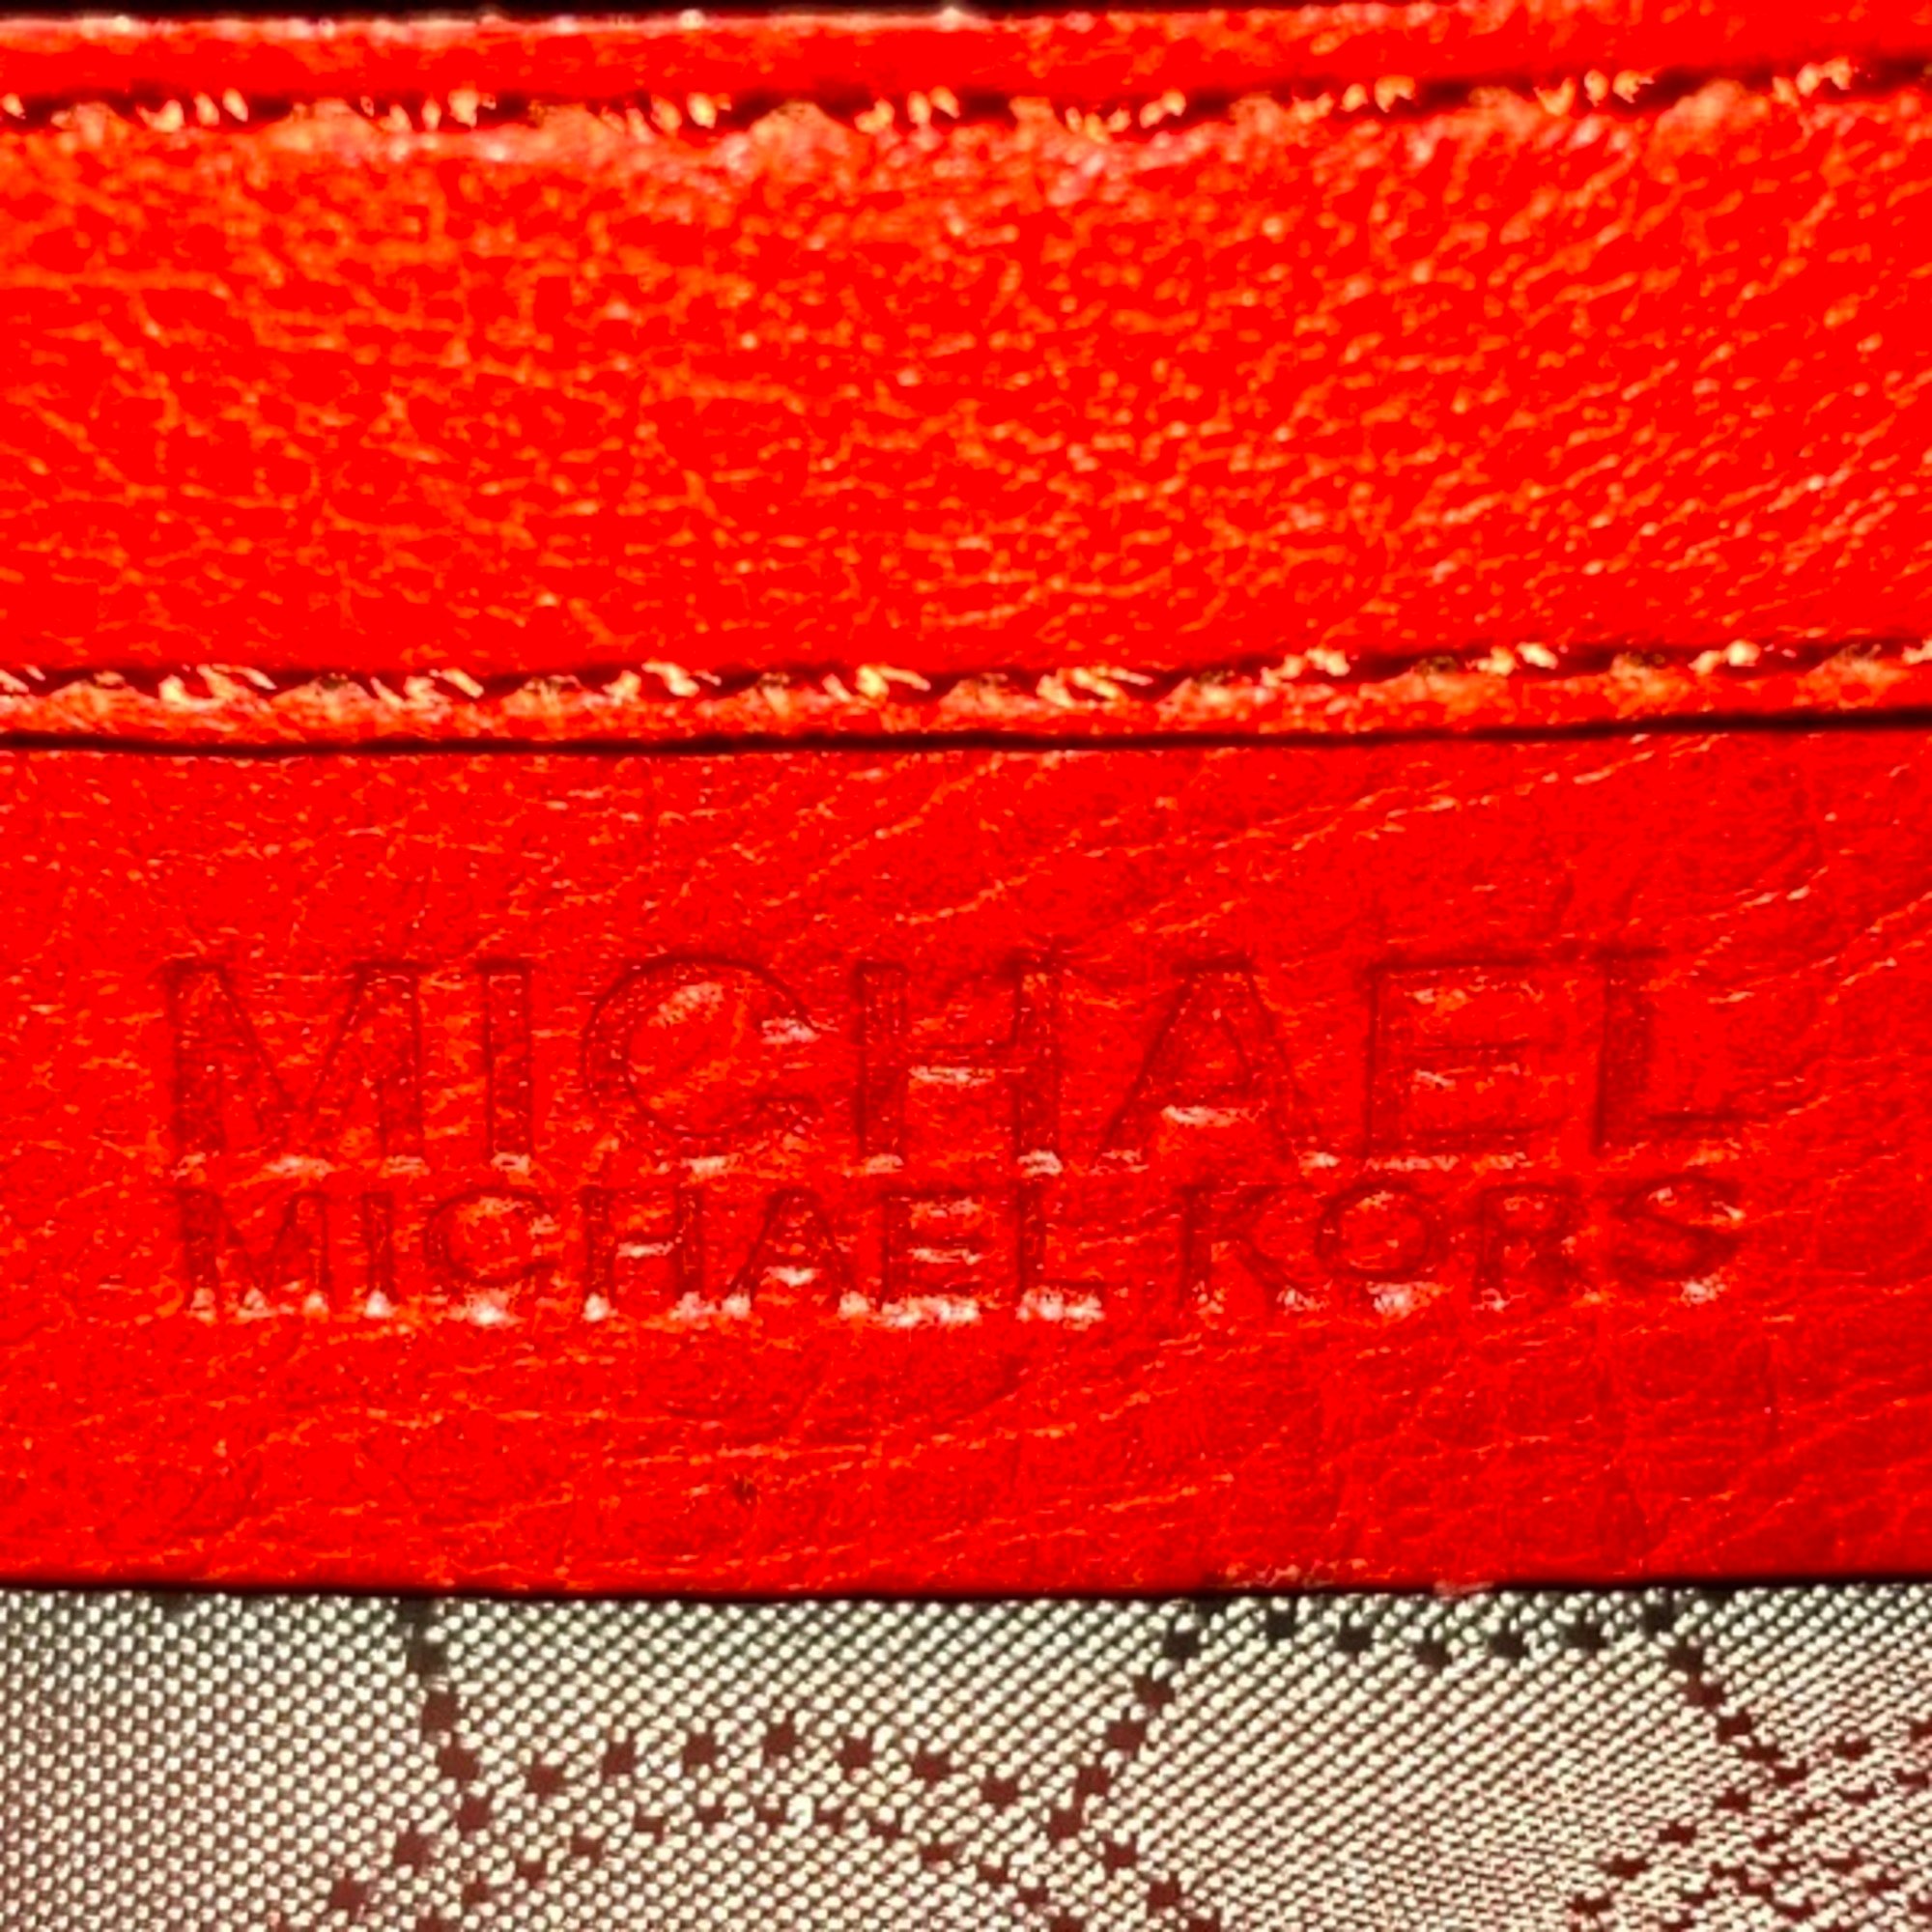 Michael Kors Leather Mandarin Orange Bag Shoulder Women's